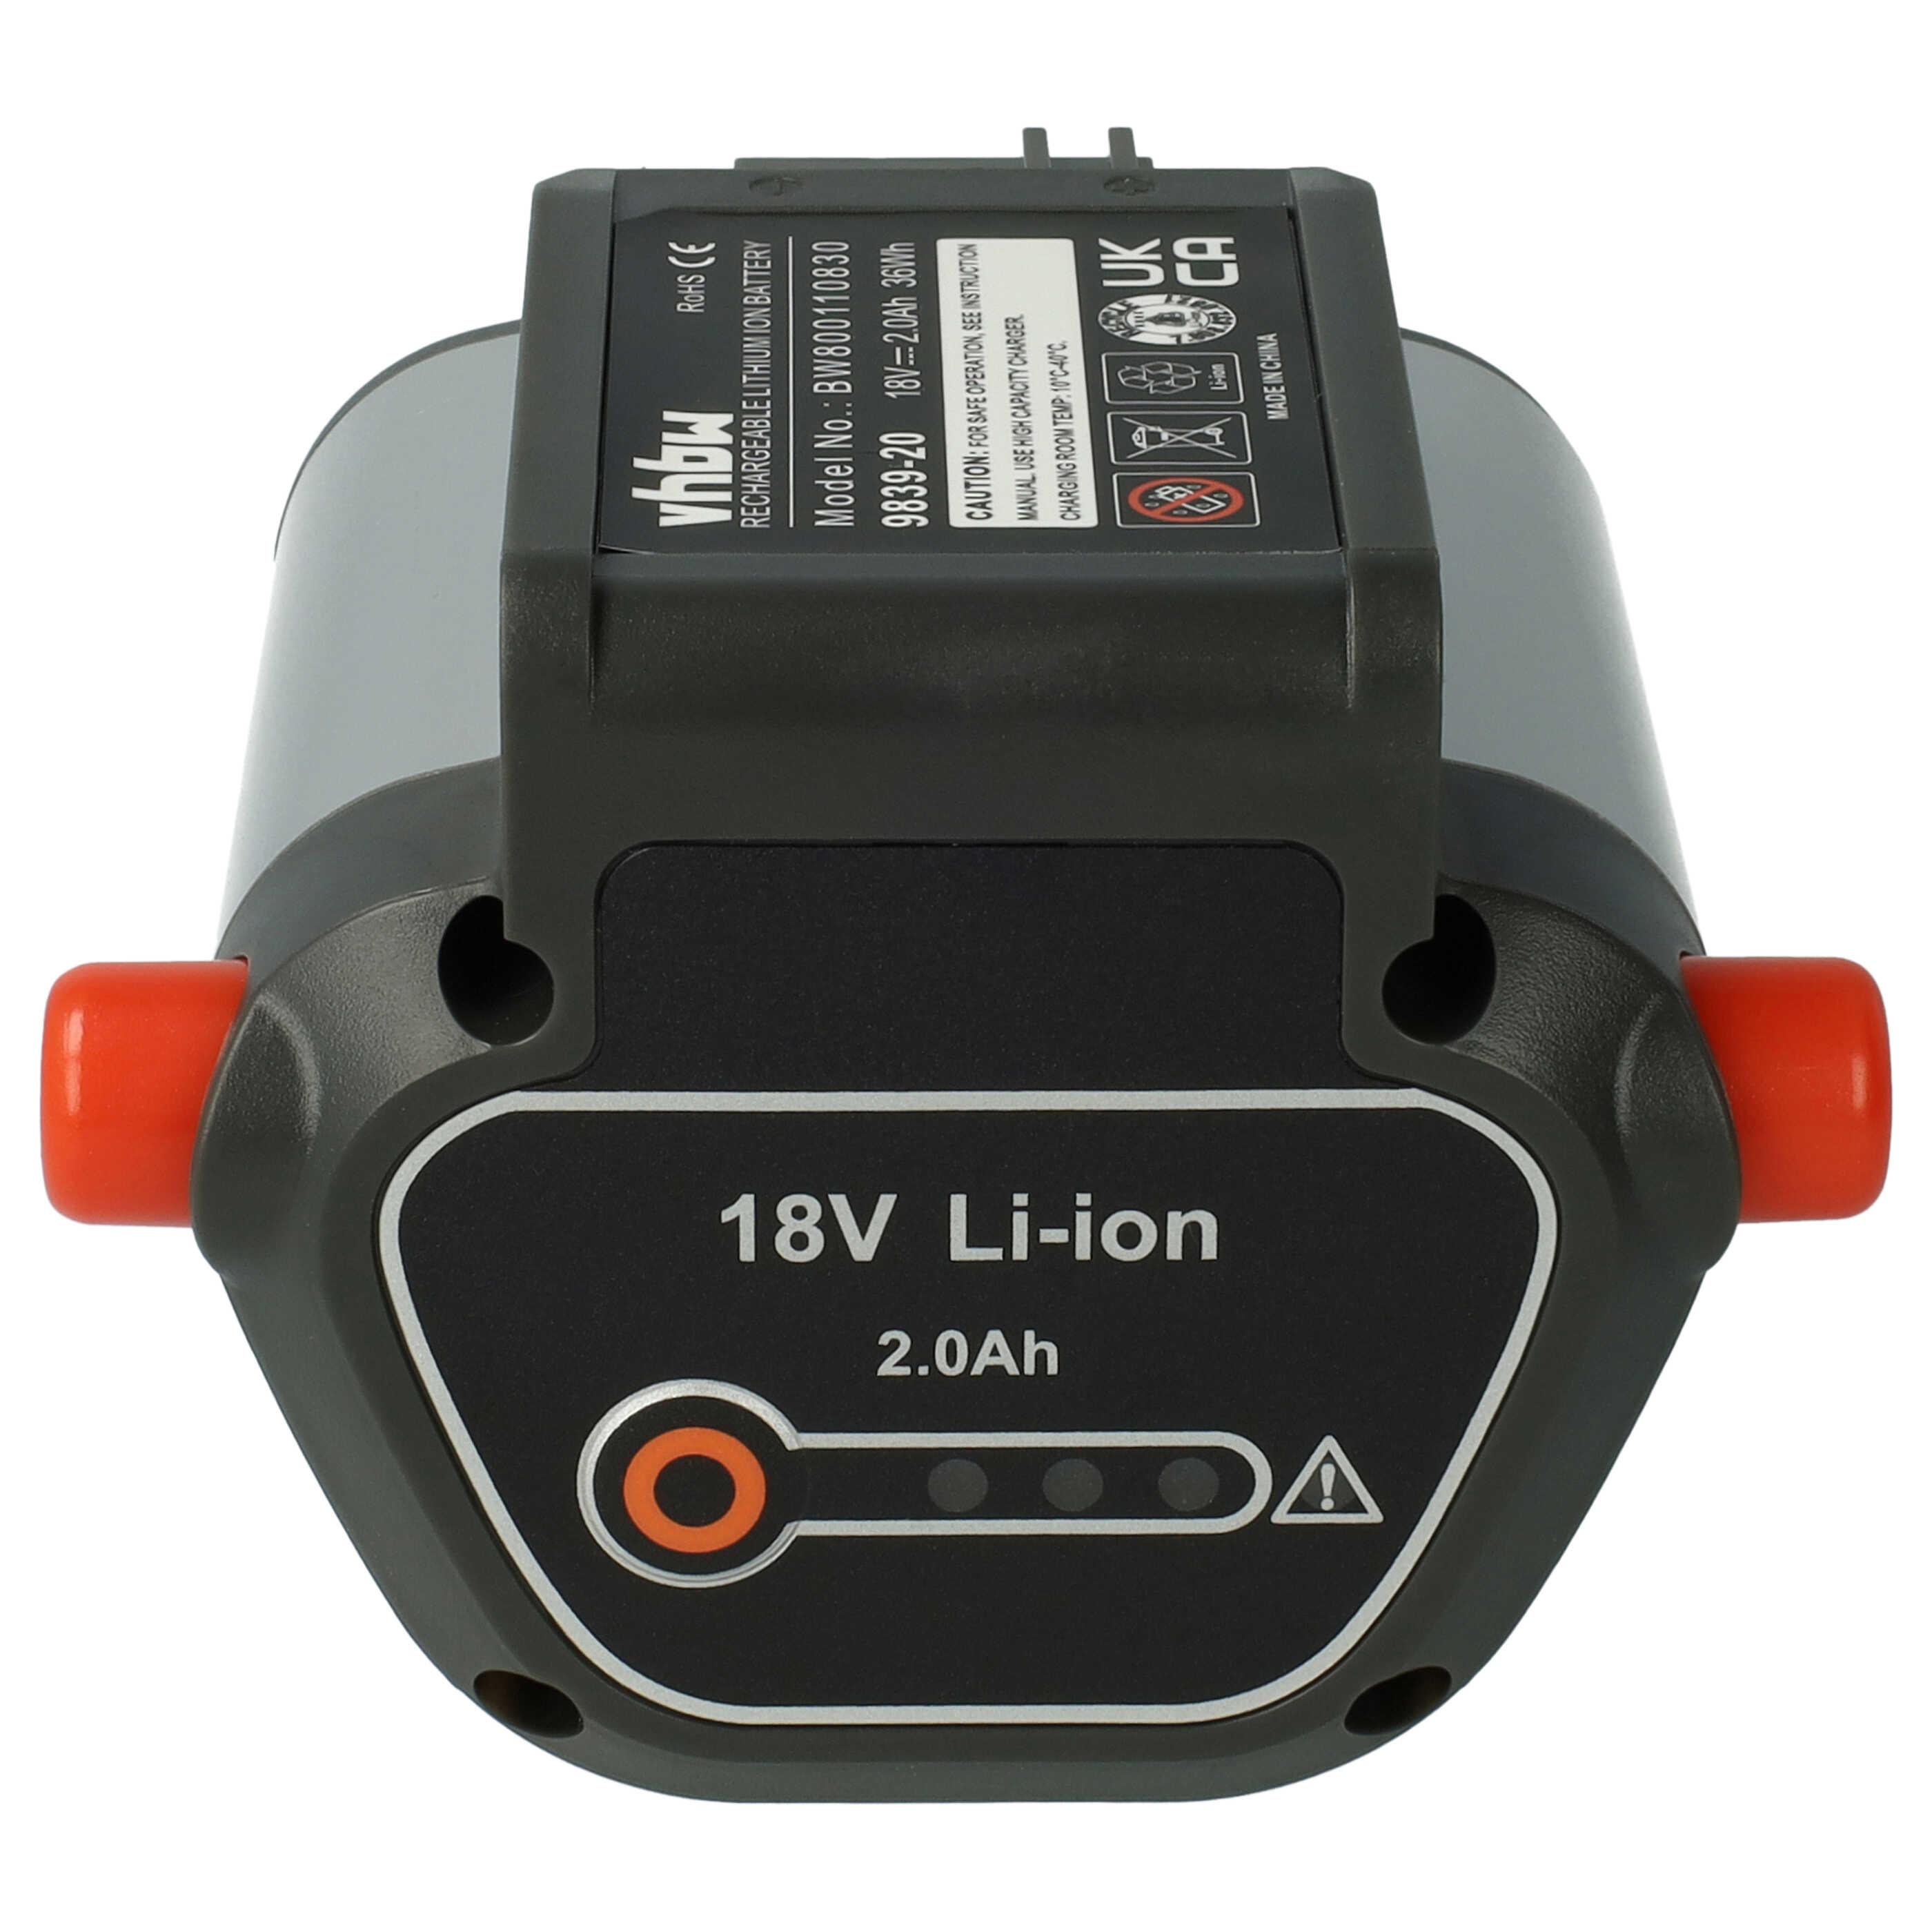 Akumulator do robota koszącego zamiennik Gardena BLi-18, 9839-20, 9840-20 - 2000 mAh 18 V Li-Ion, czarny